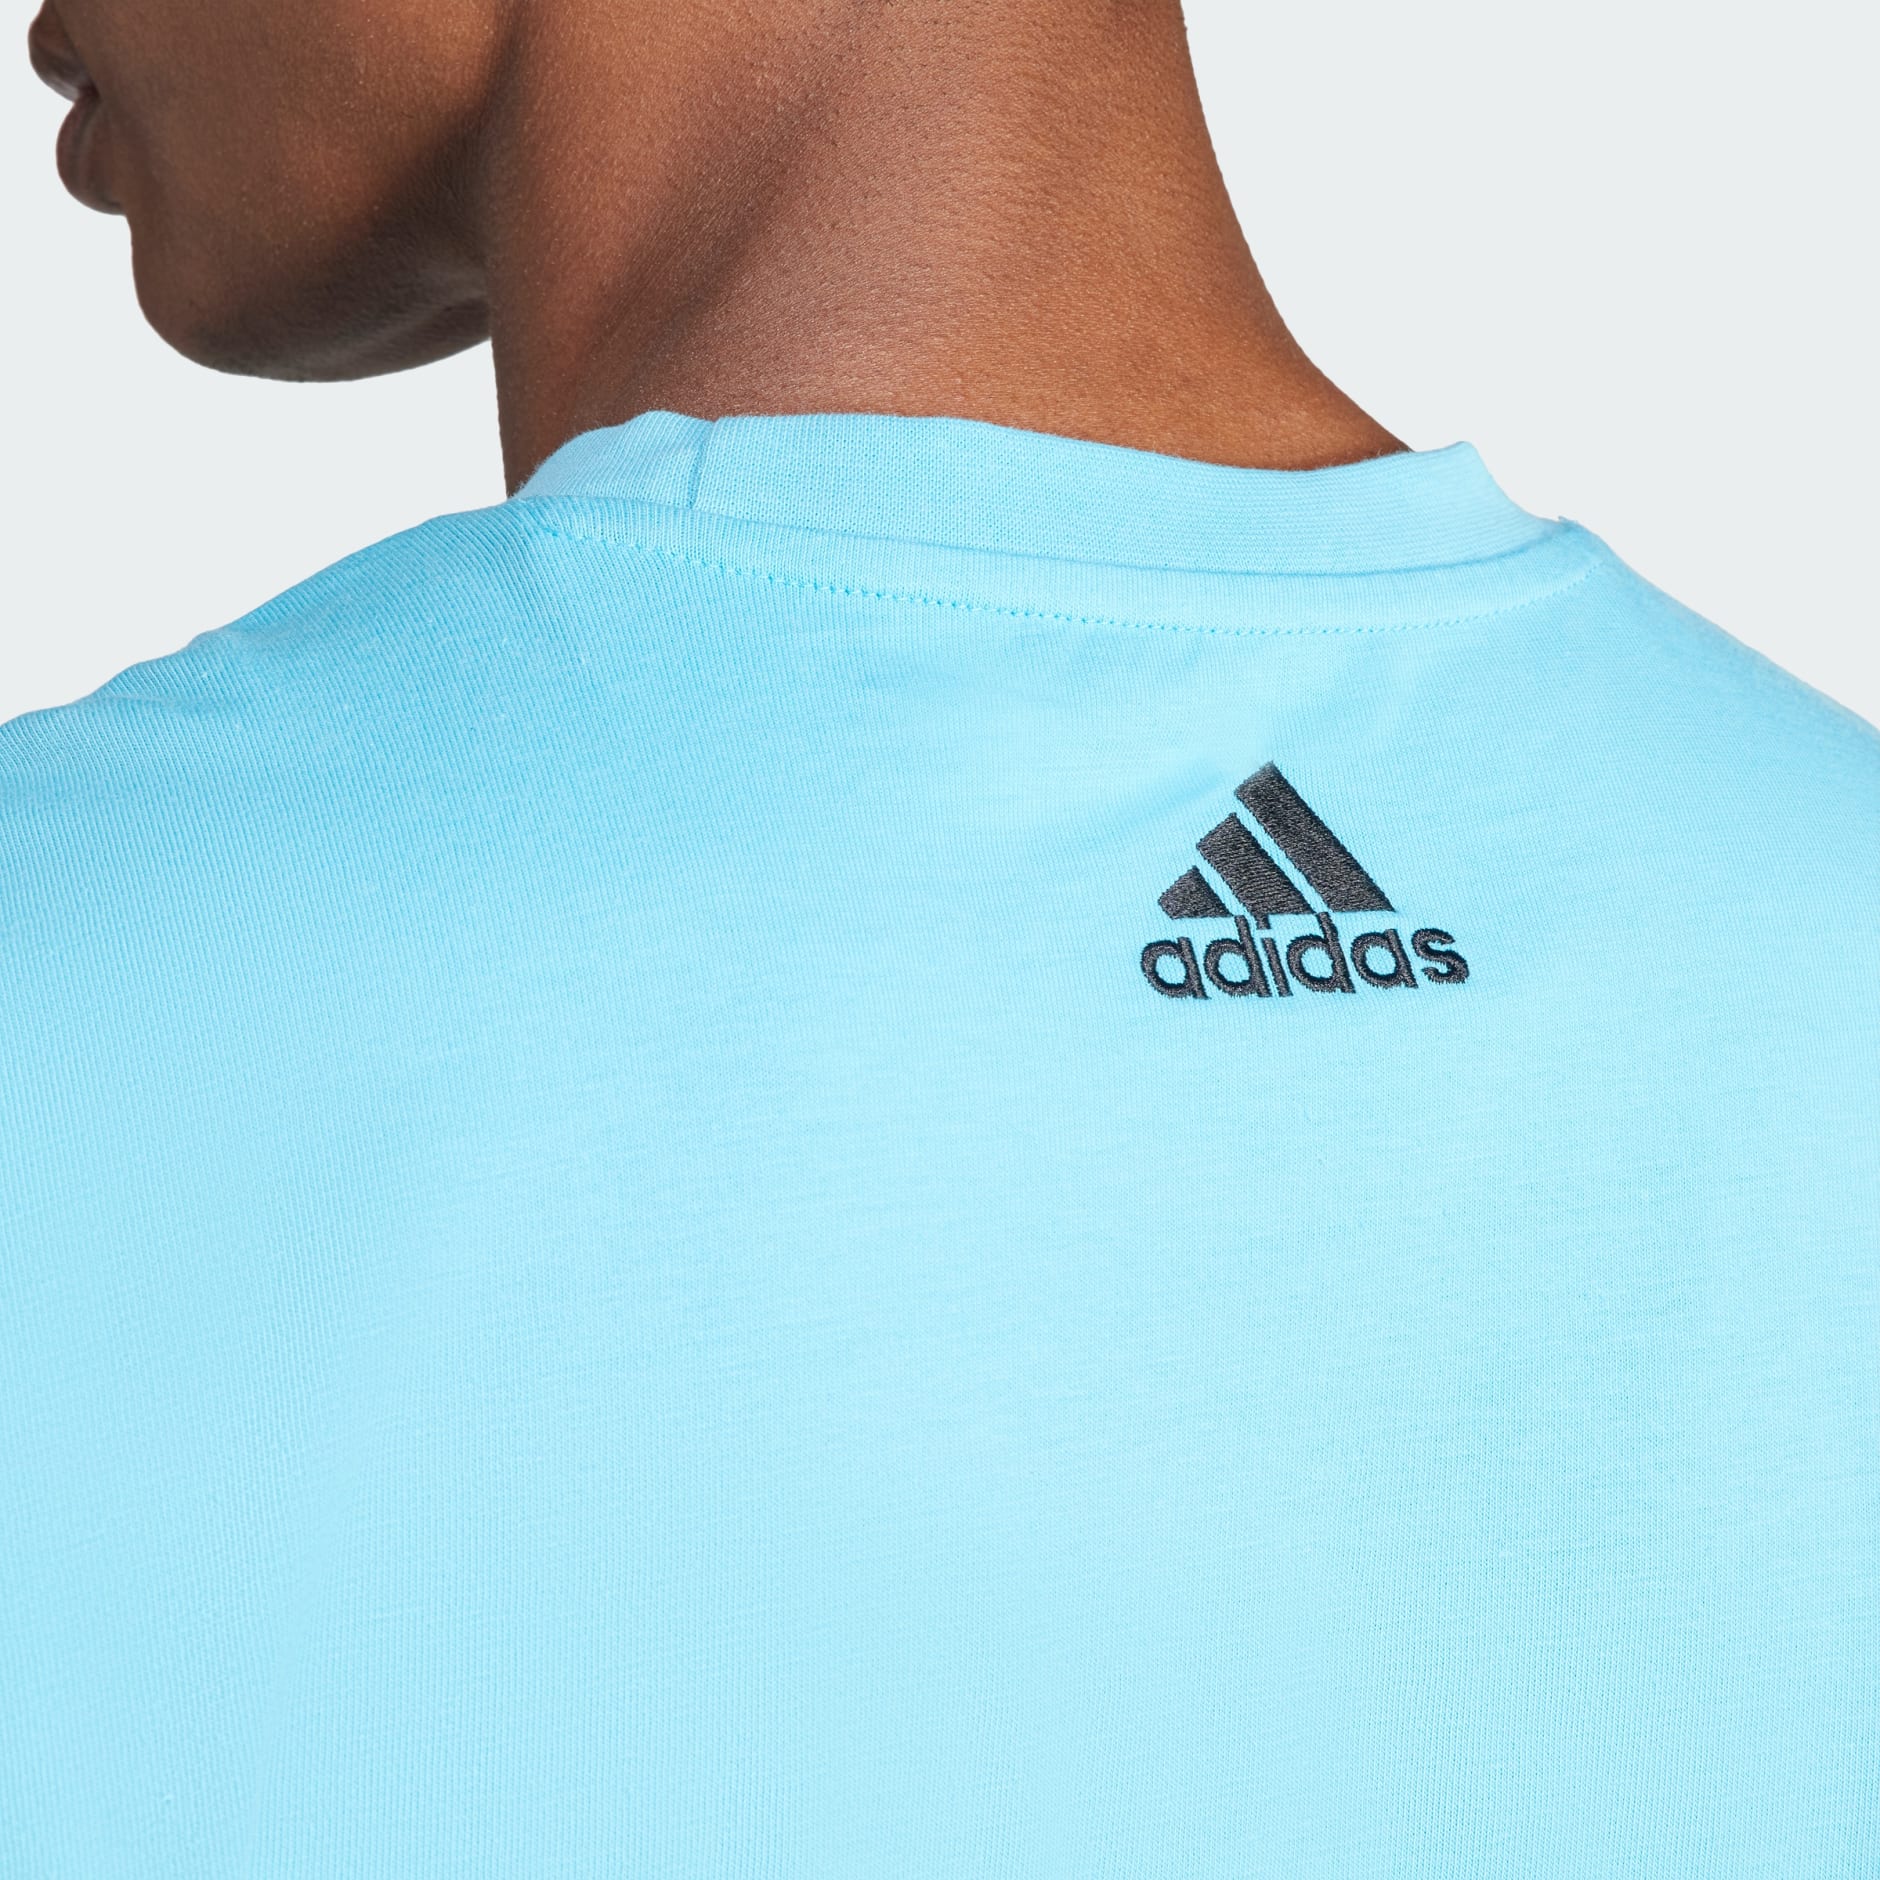 Camiseta adidas Brand Love - Masculina - Fátima Esportes